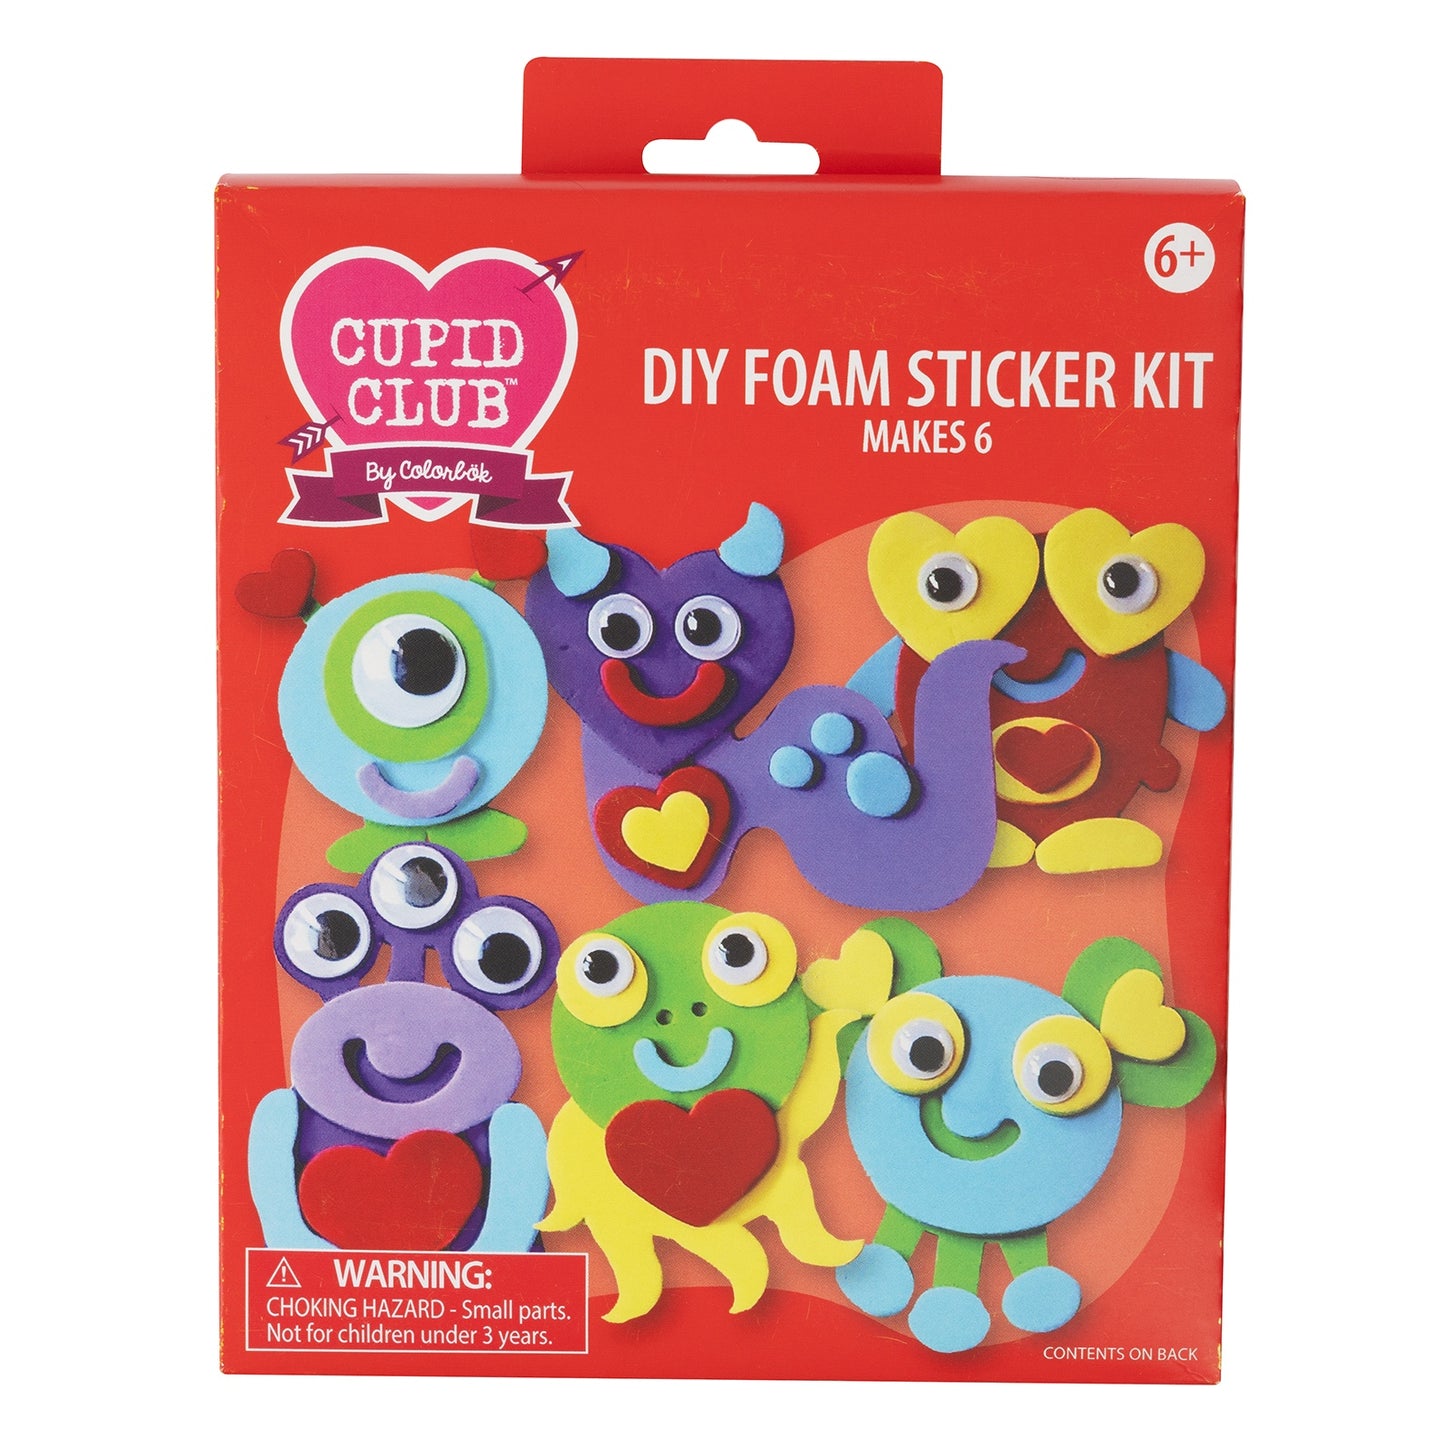 Colorbok Cupid Club DIY Foam Sticker Kit-Monsters, Makes 6